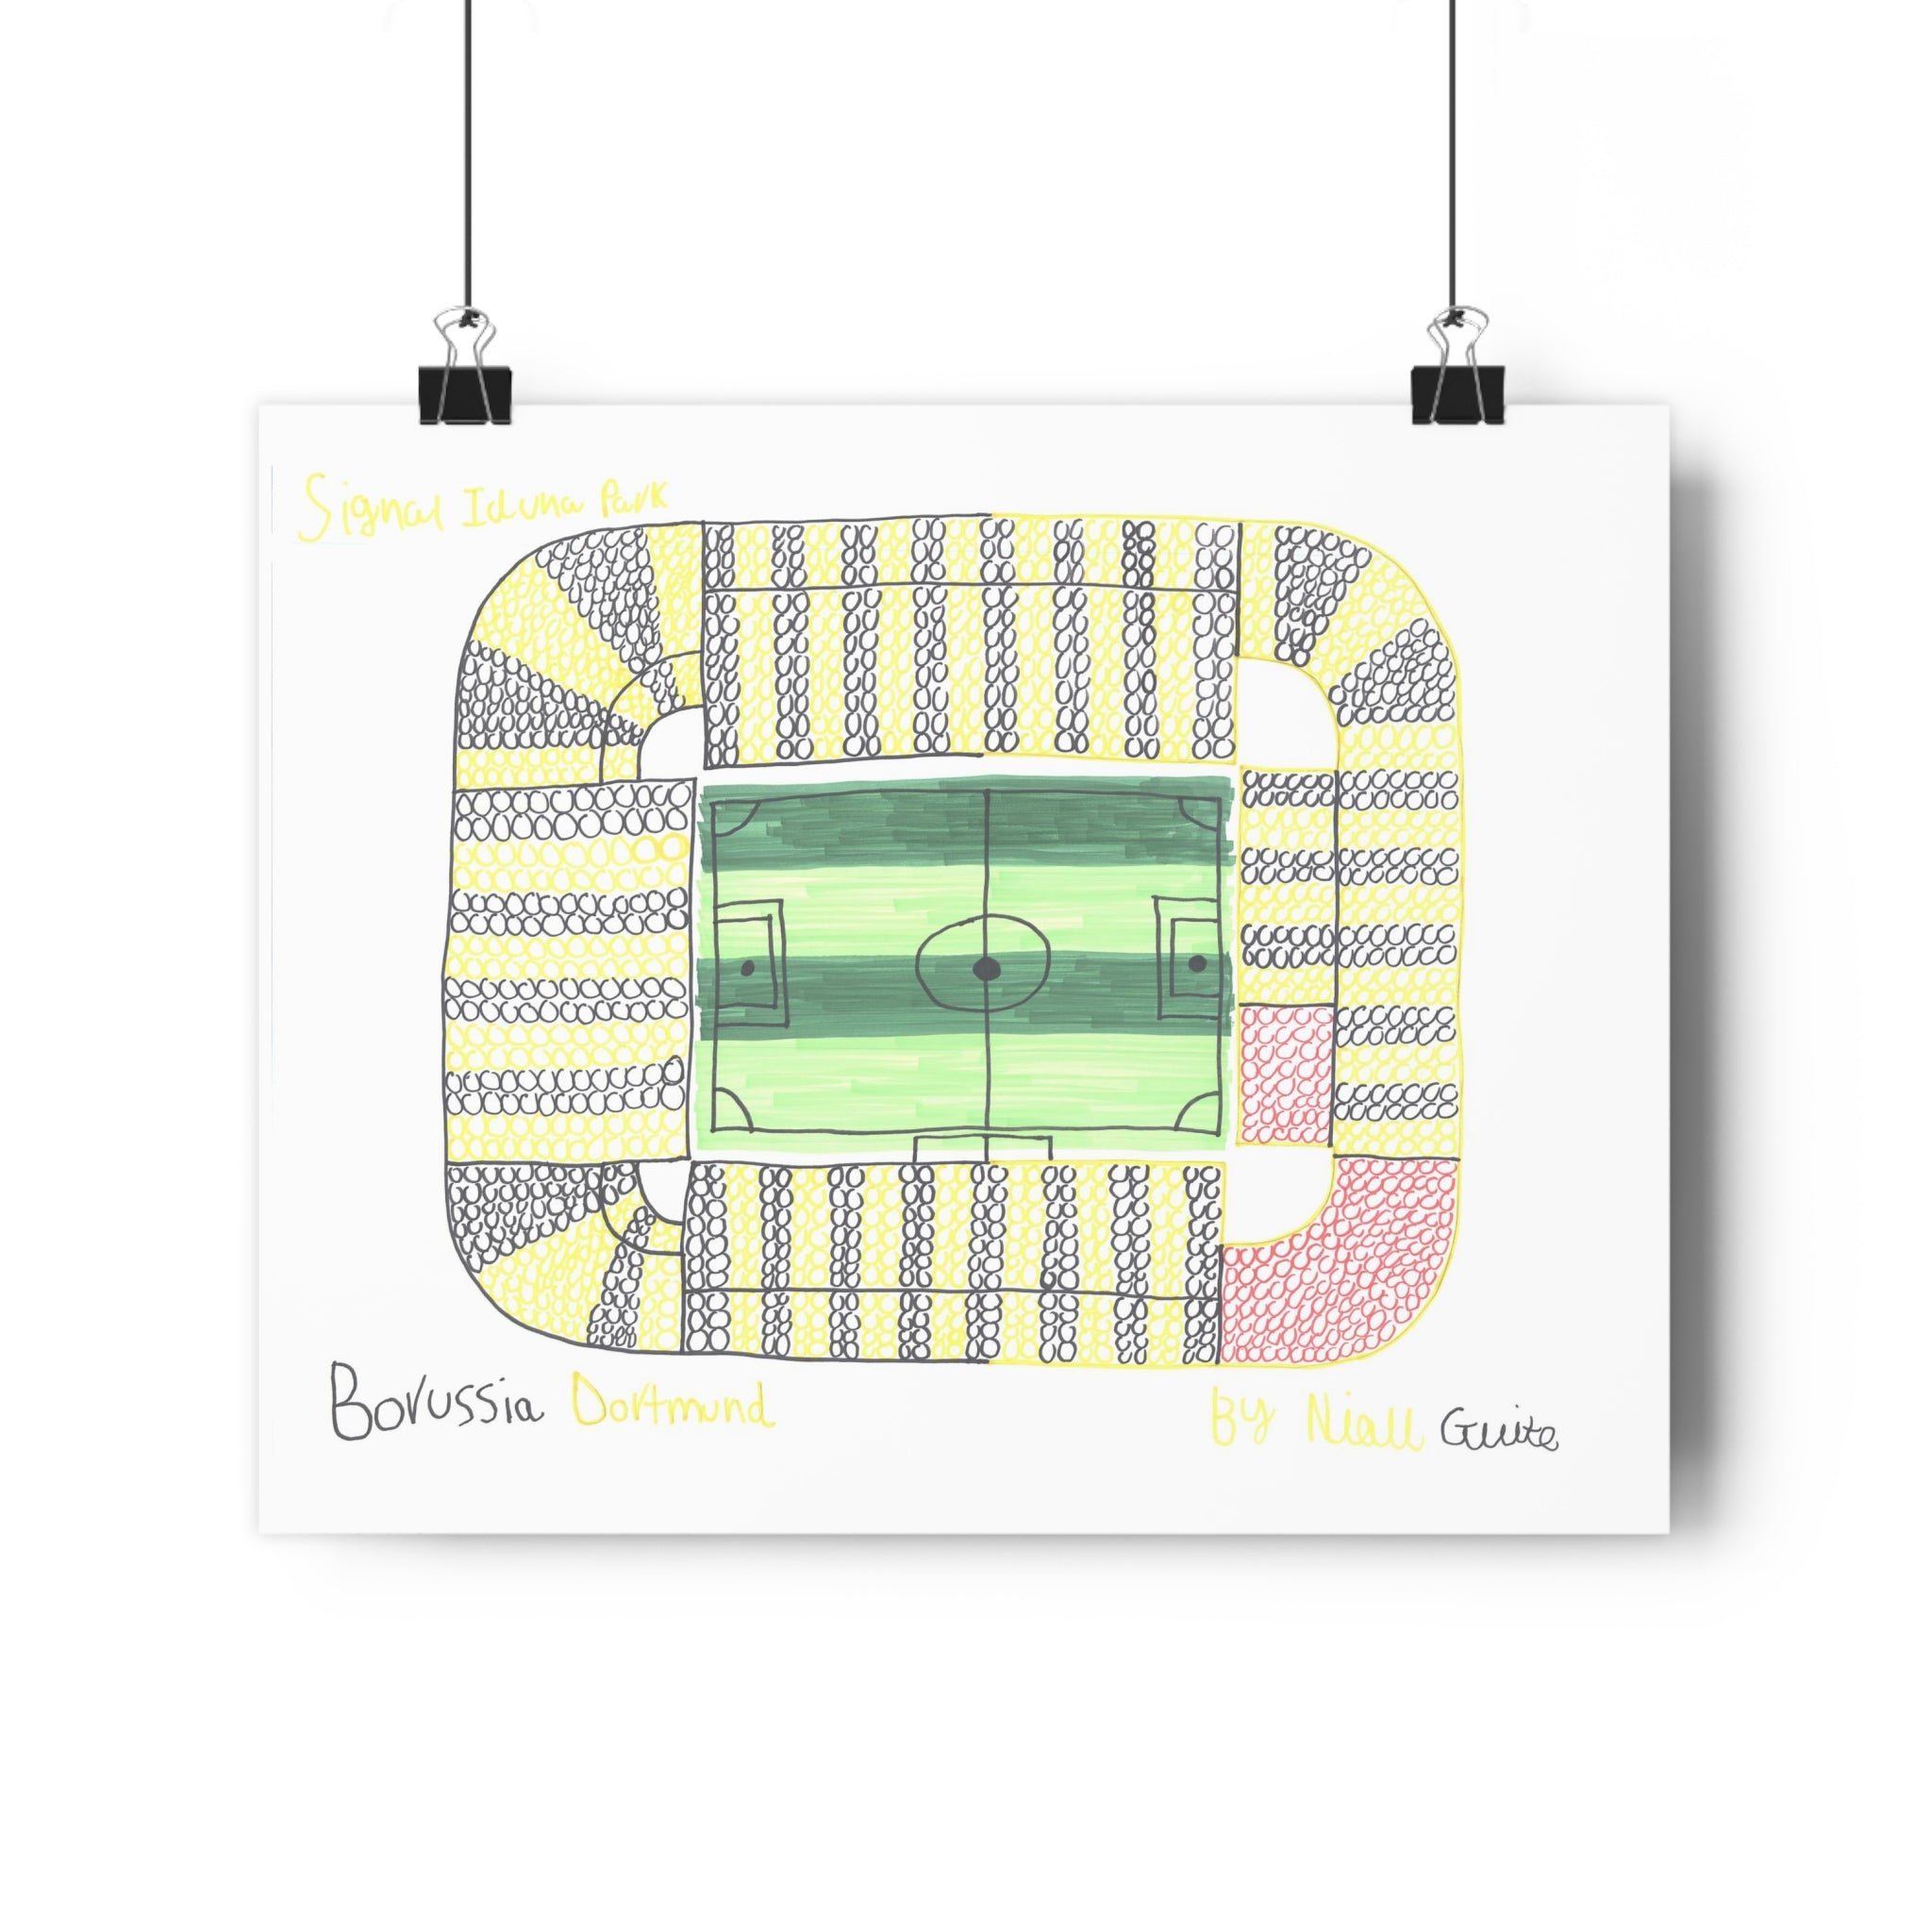 Borussia Dortmund - Signal Iduna Park - Print